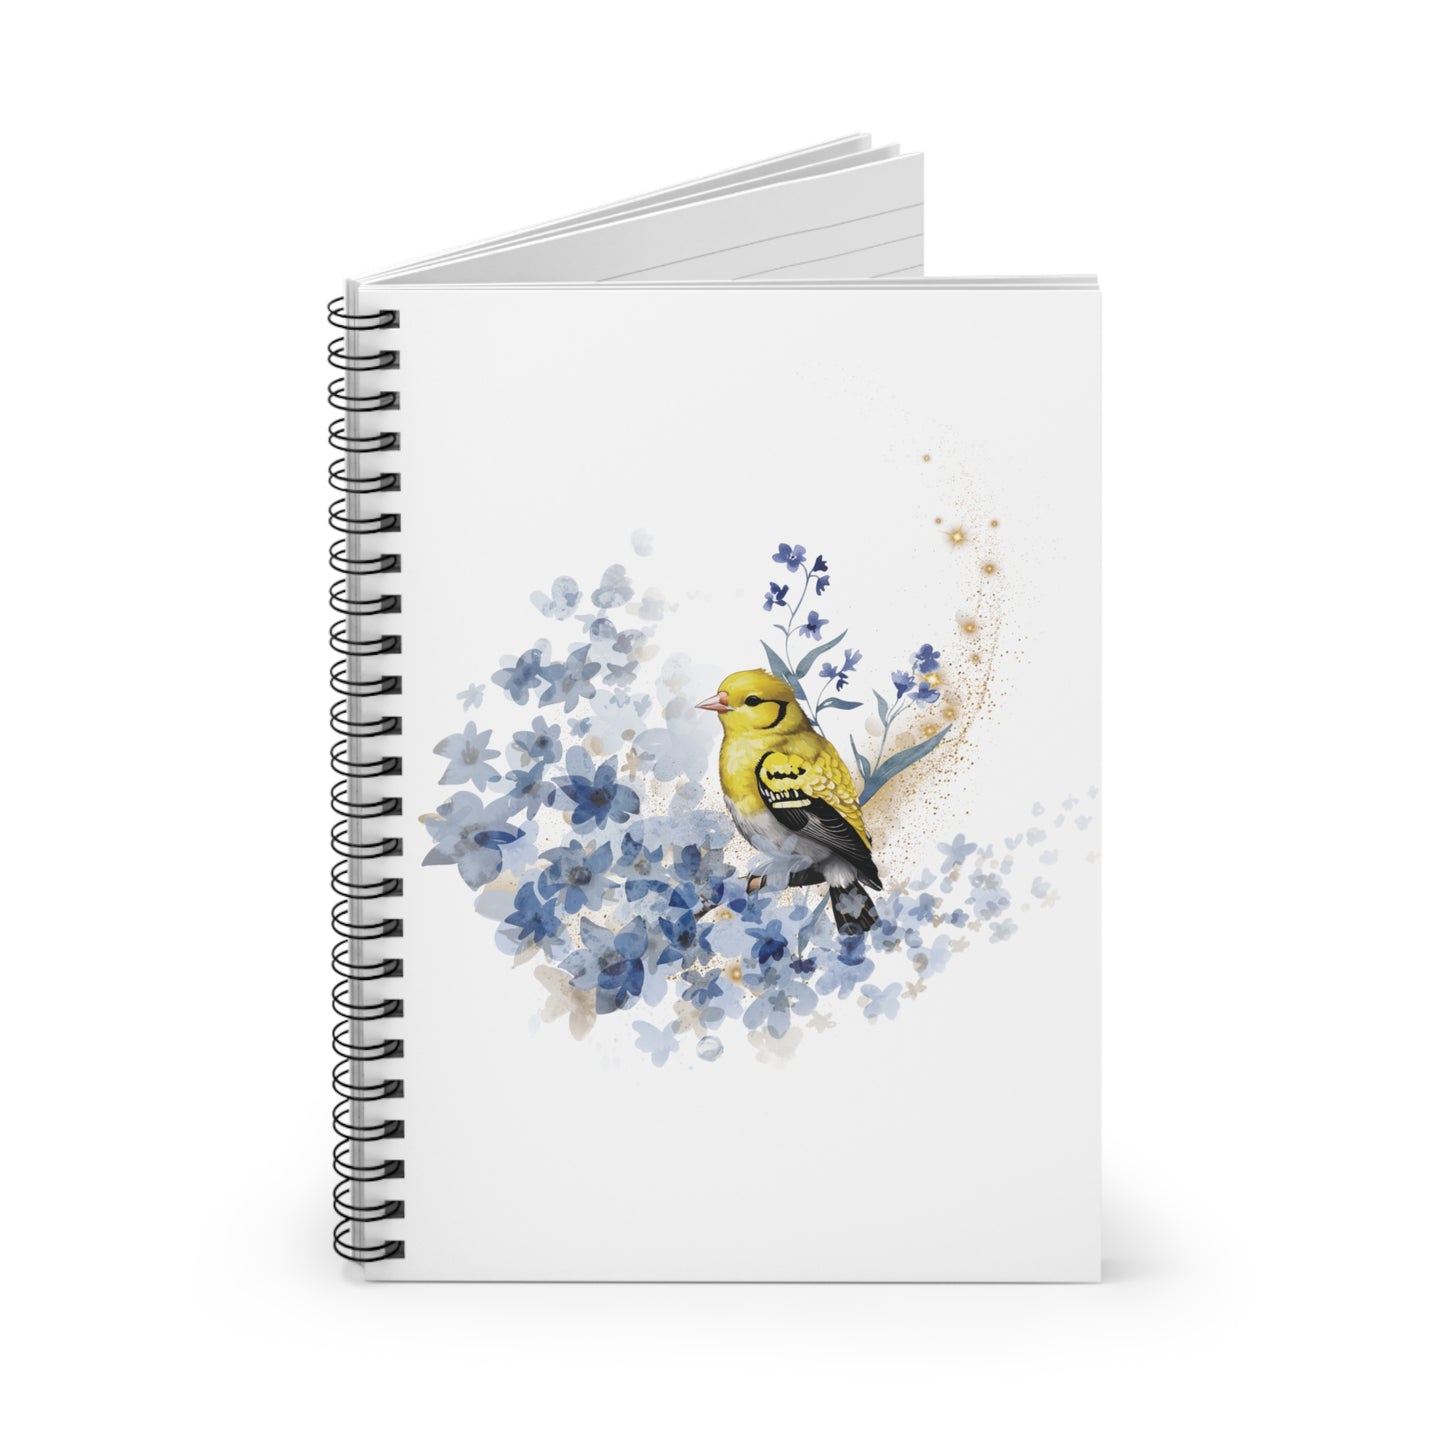 Bird Watching: Spiral Notebook - Log Books - Journals - Diaries - and More Custom Printed by TheGlassyLass